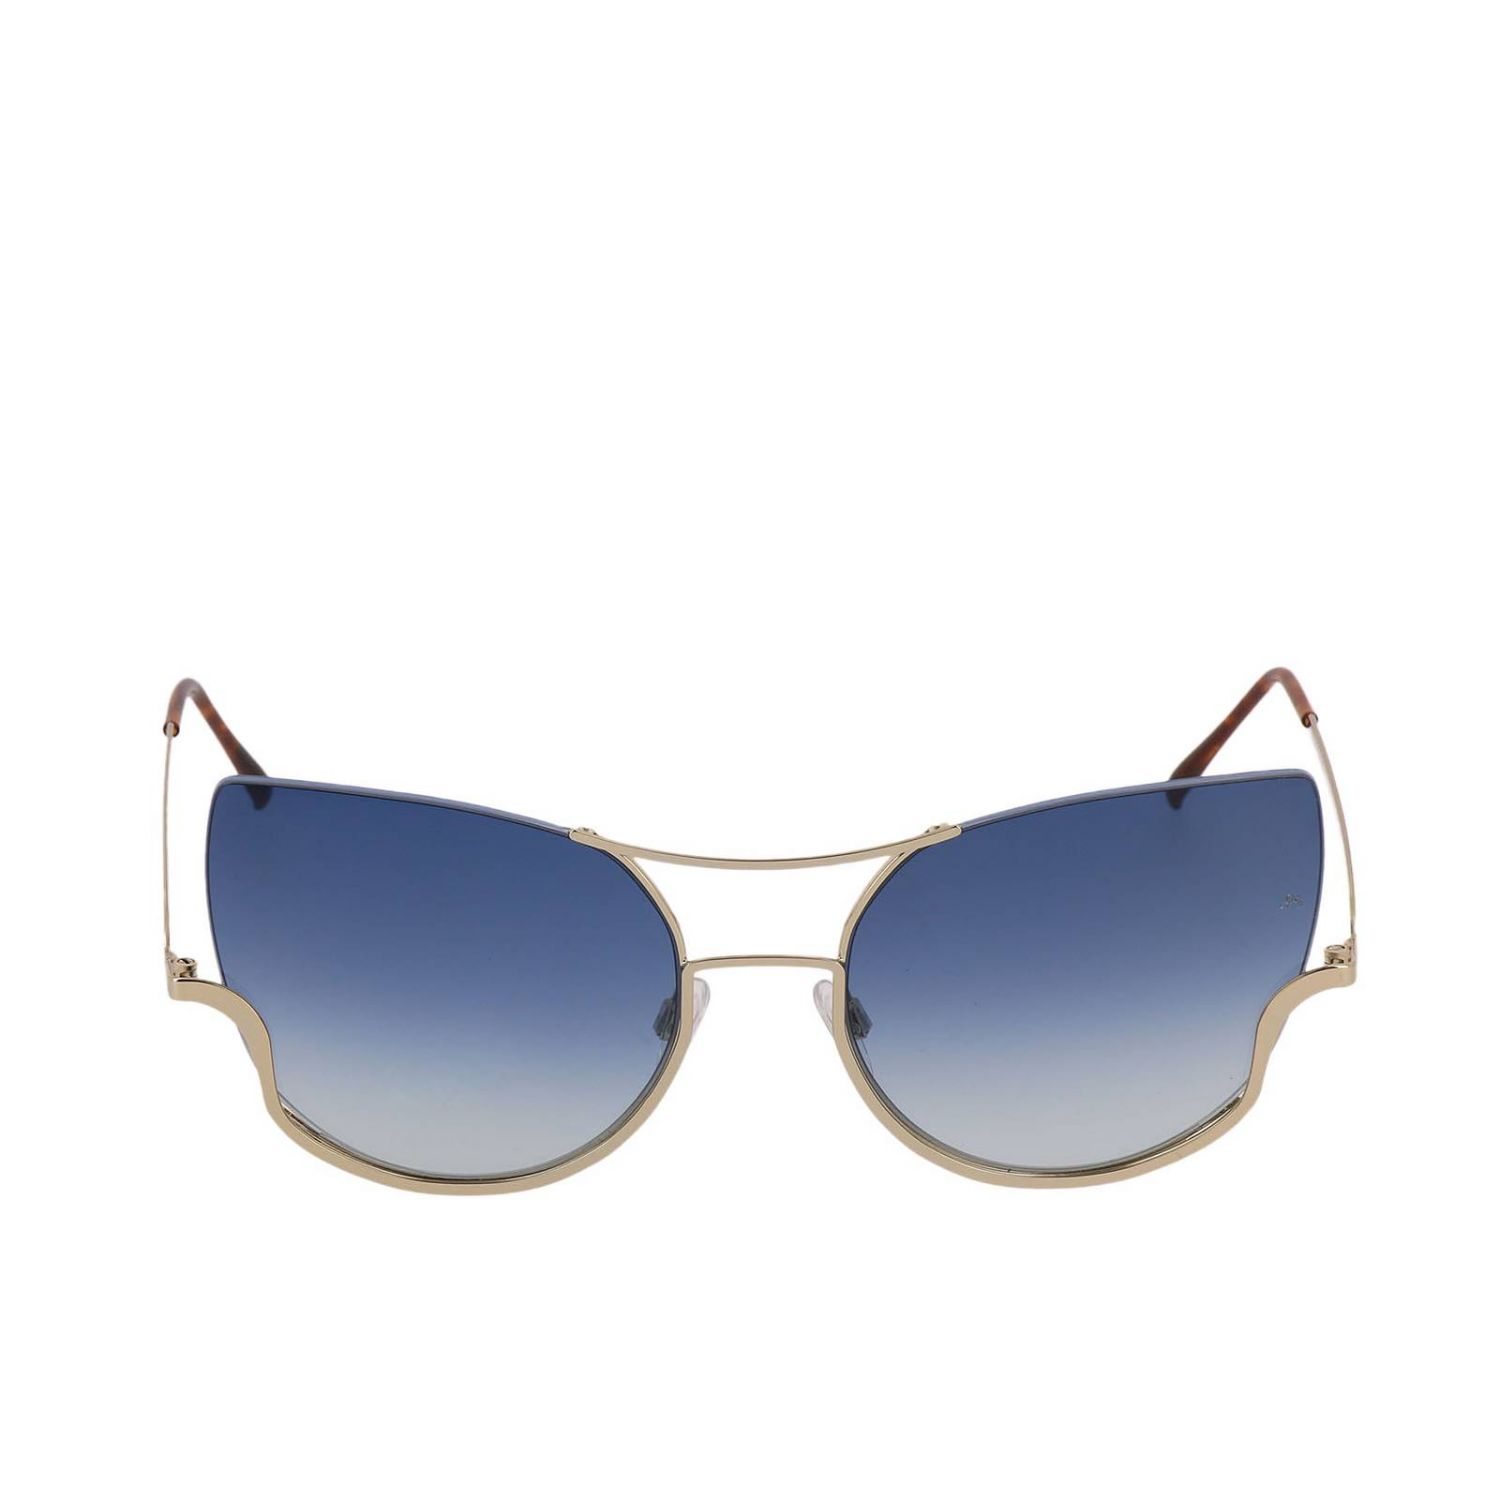 Joy Star Outlet: Sunglasses women | Glasses Joy Star Women Blue ...